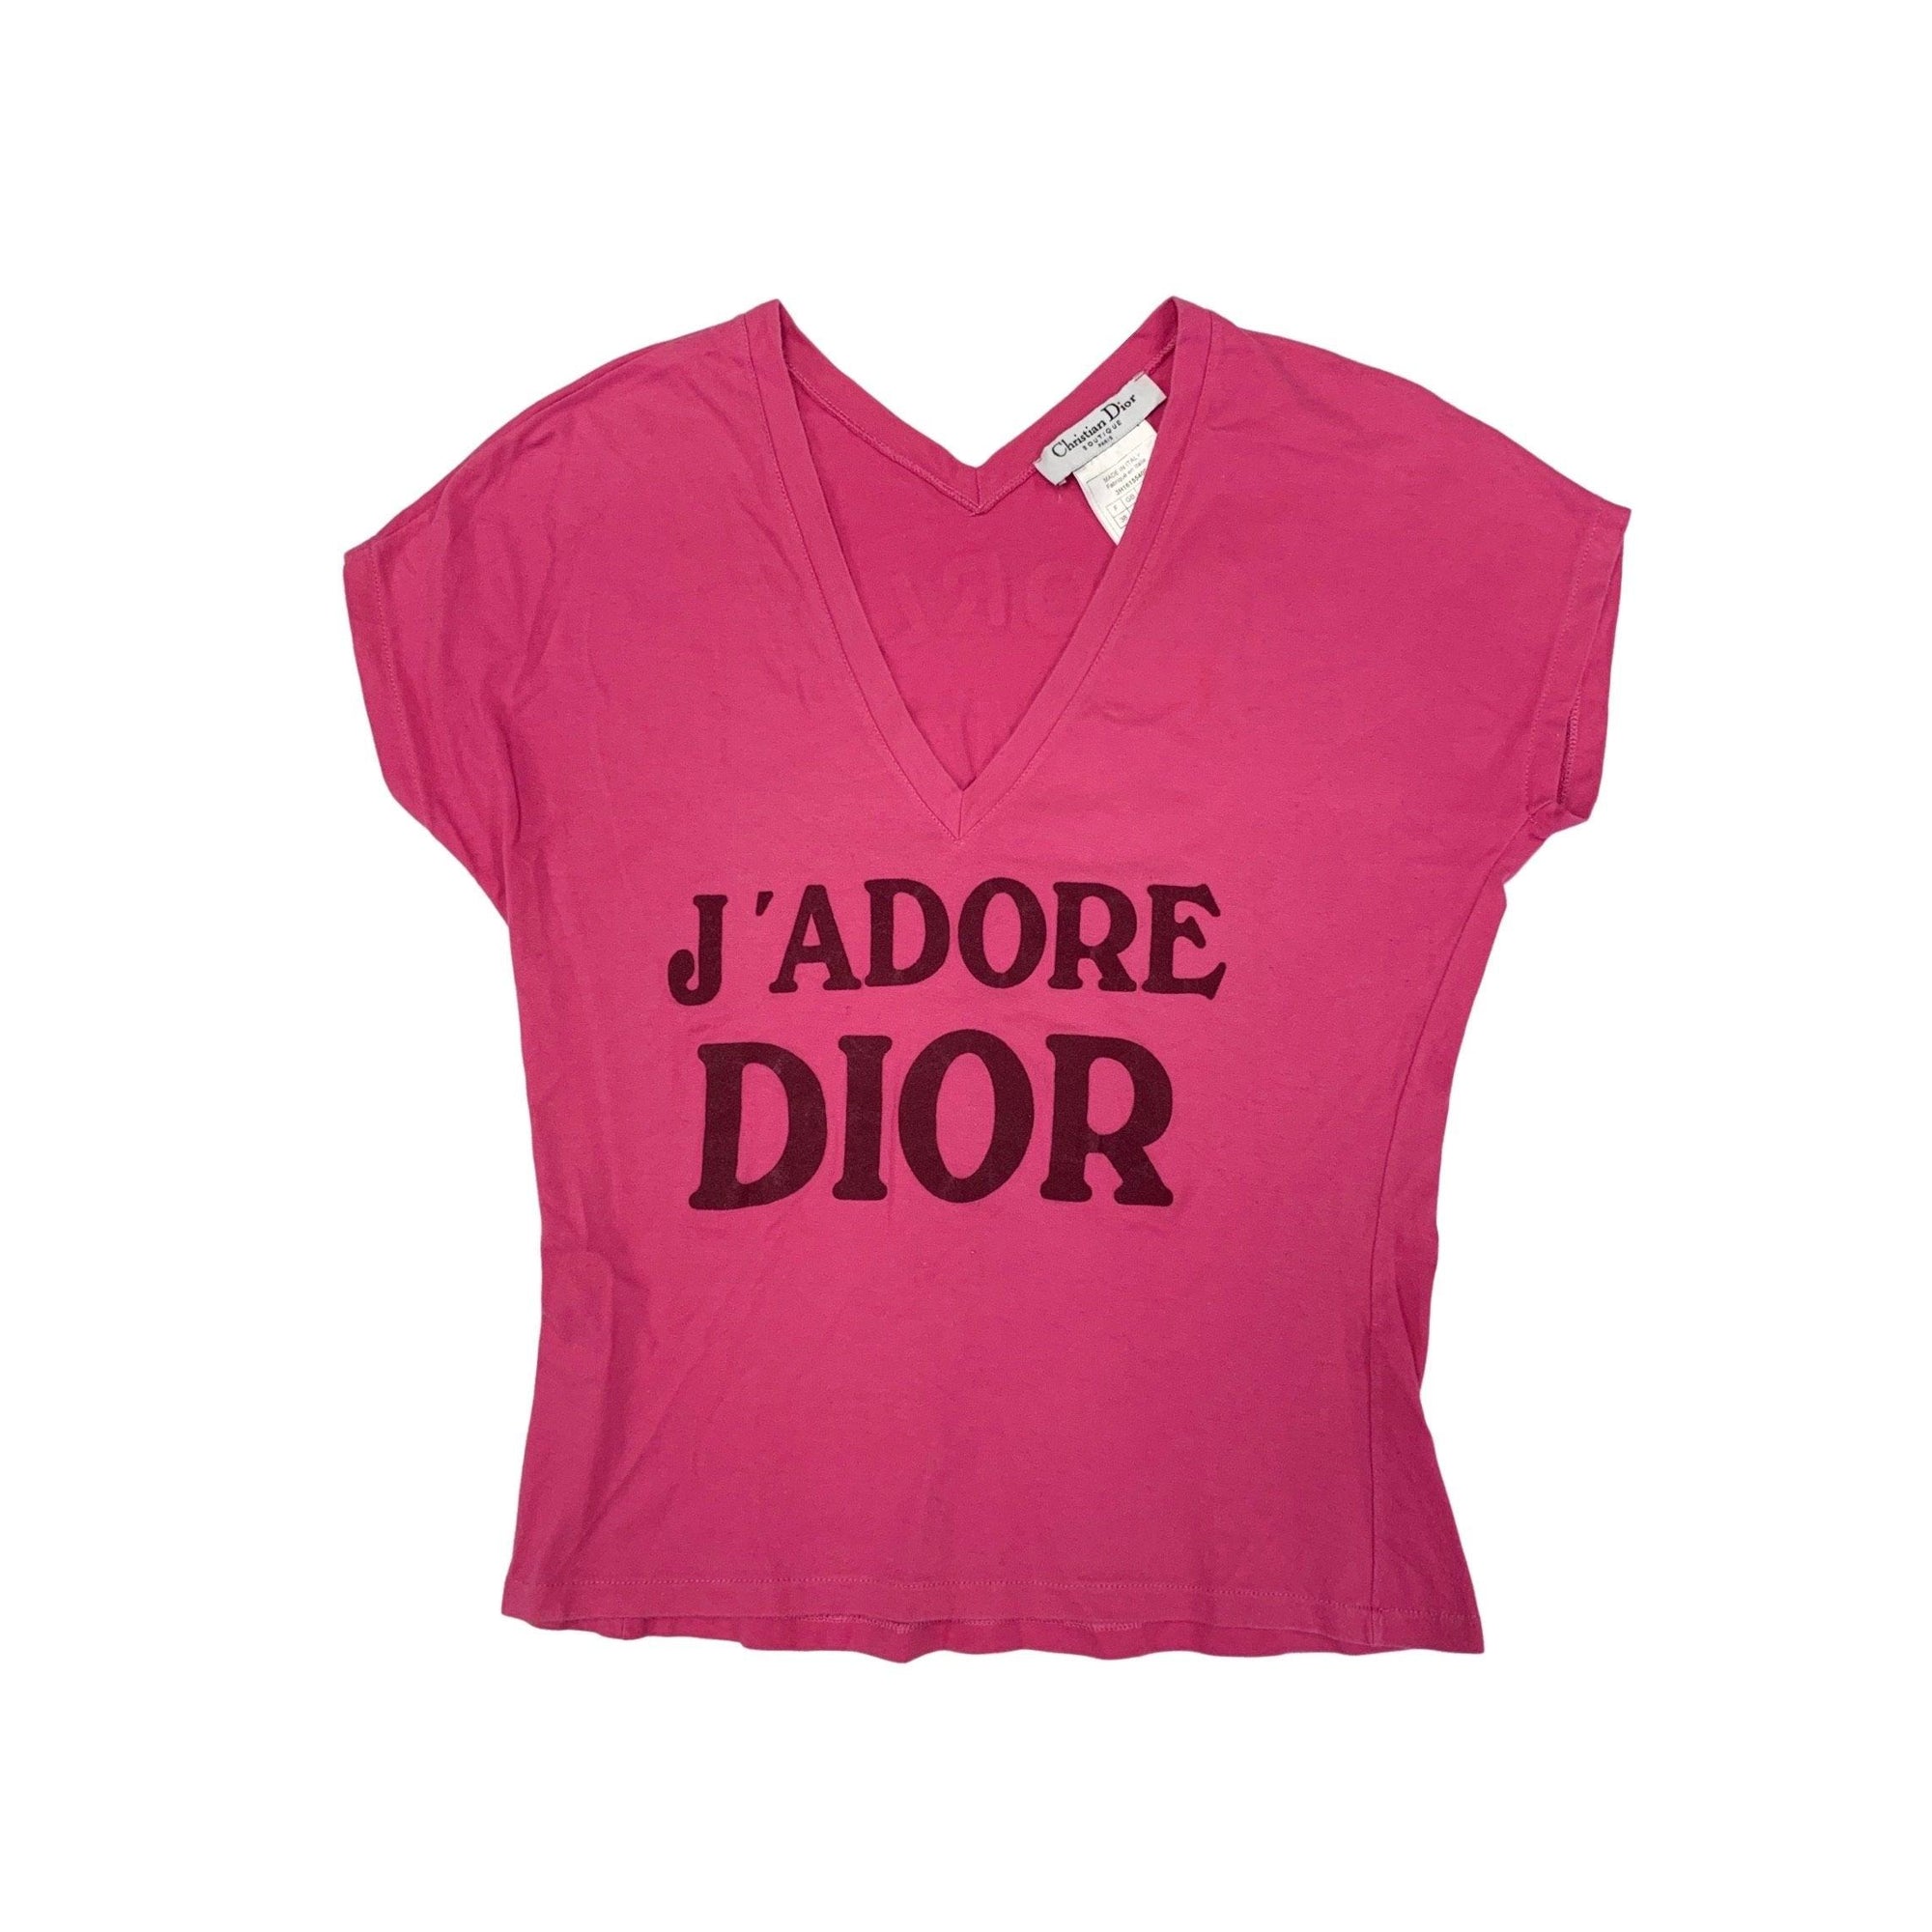 J’adore Dior Pink V-Neck Top - Apparel